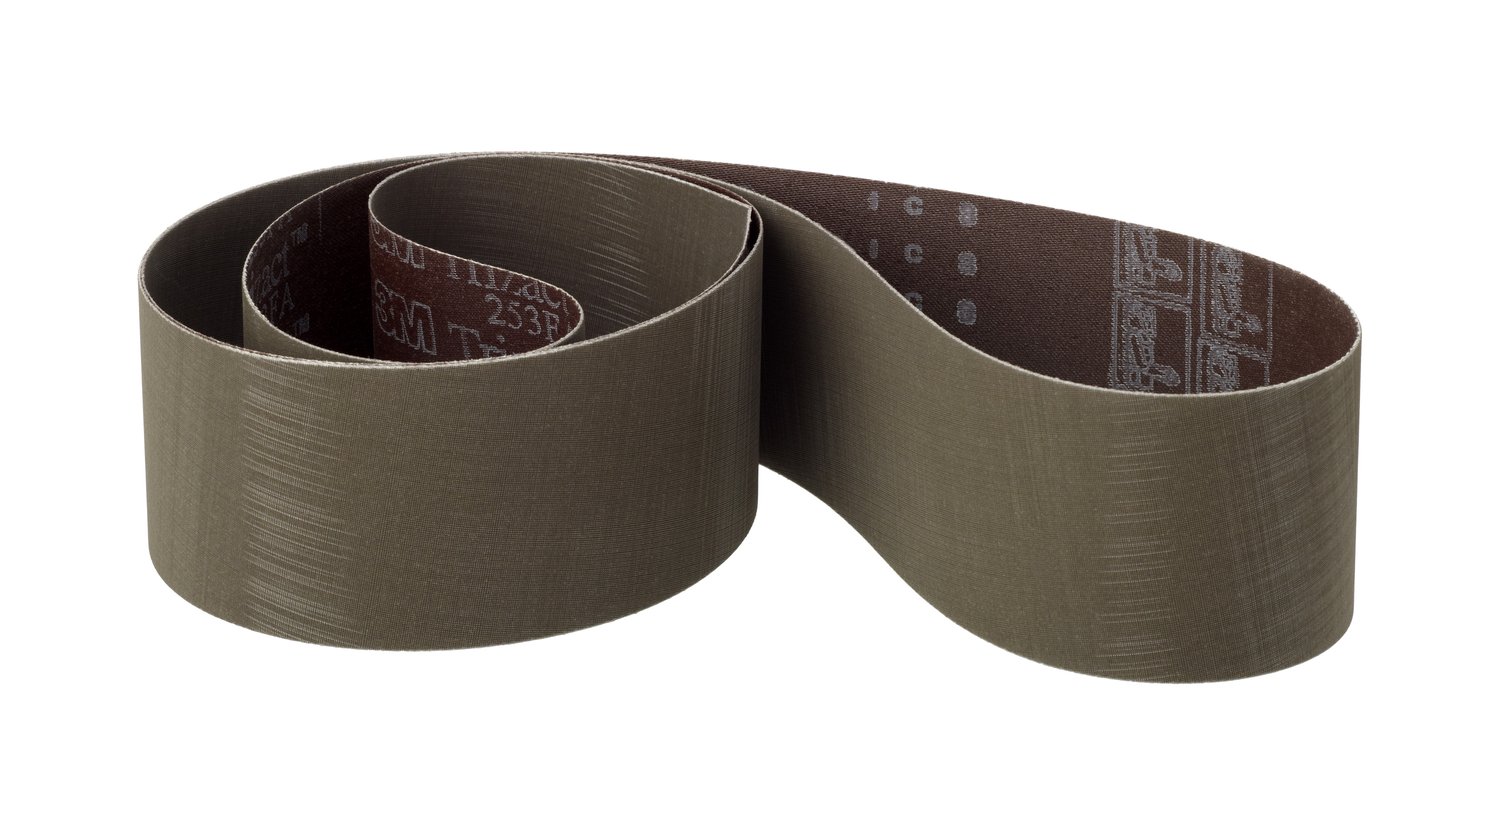 7010515334 - 3M Trizact Cloth Belt 253FA, A80 XF-weight, 2 in x 60 in, Film-lok,
Full-flex